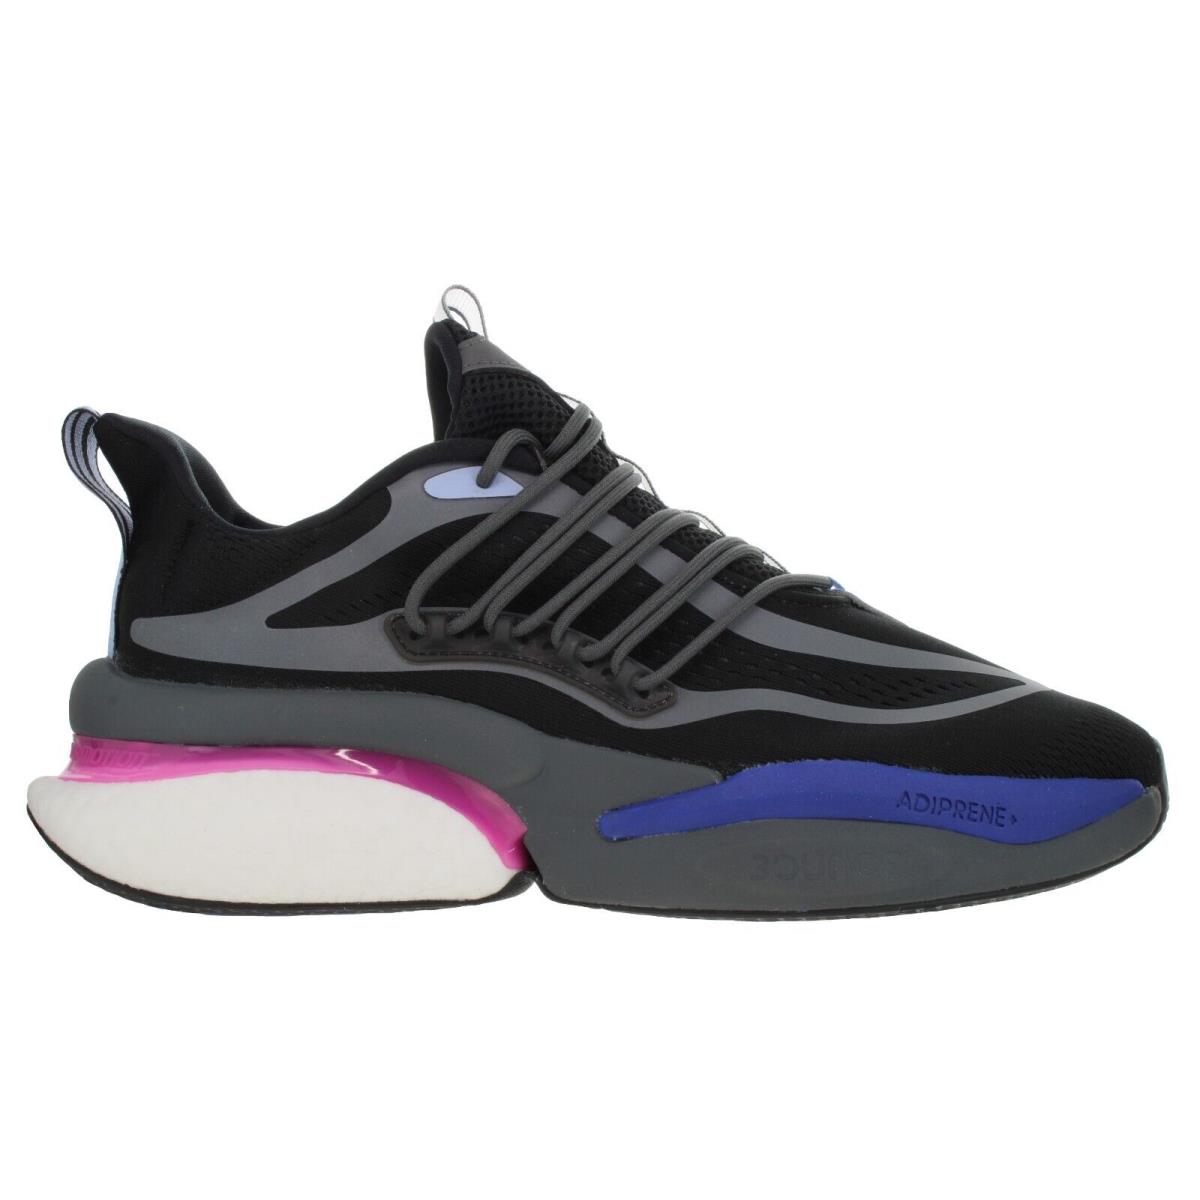 Adidas Men`s Alphaboost V1 Black - Multicolor Training Shoes Size 11.5 - Core Black, Lucid Fuchsia, Blue